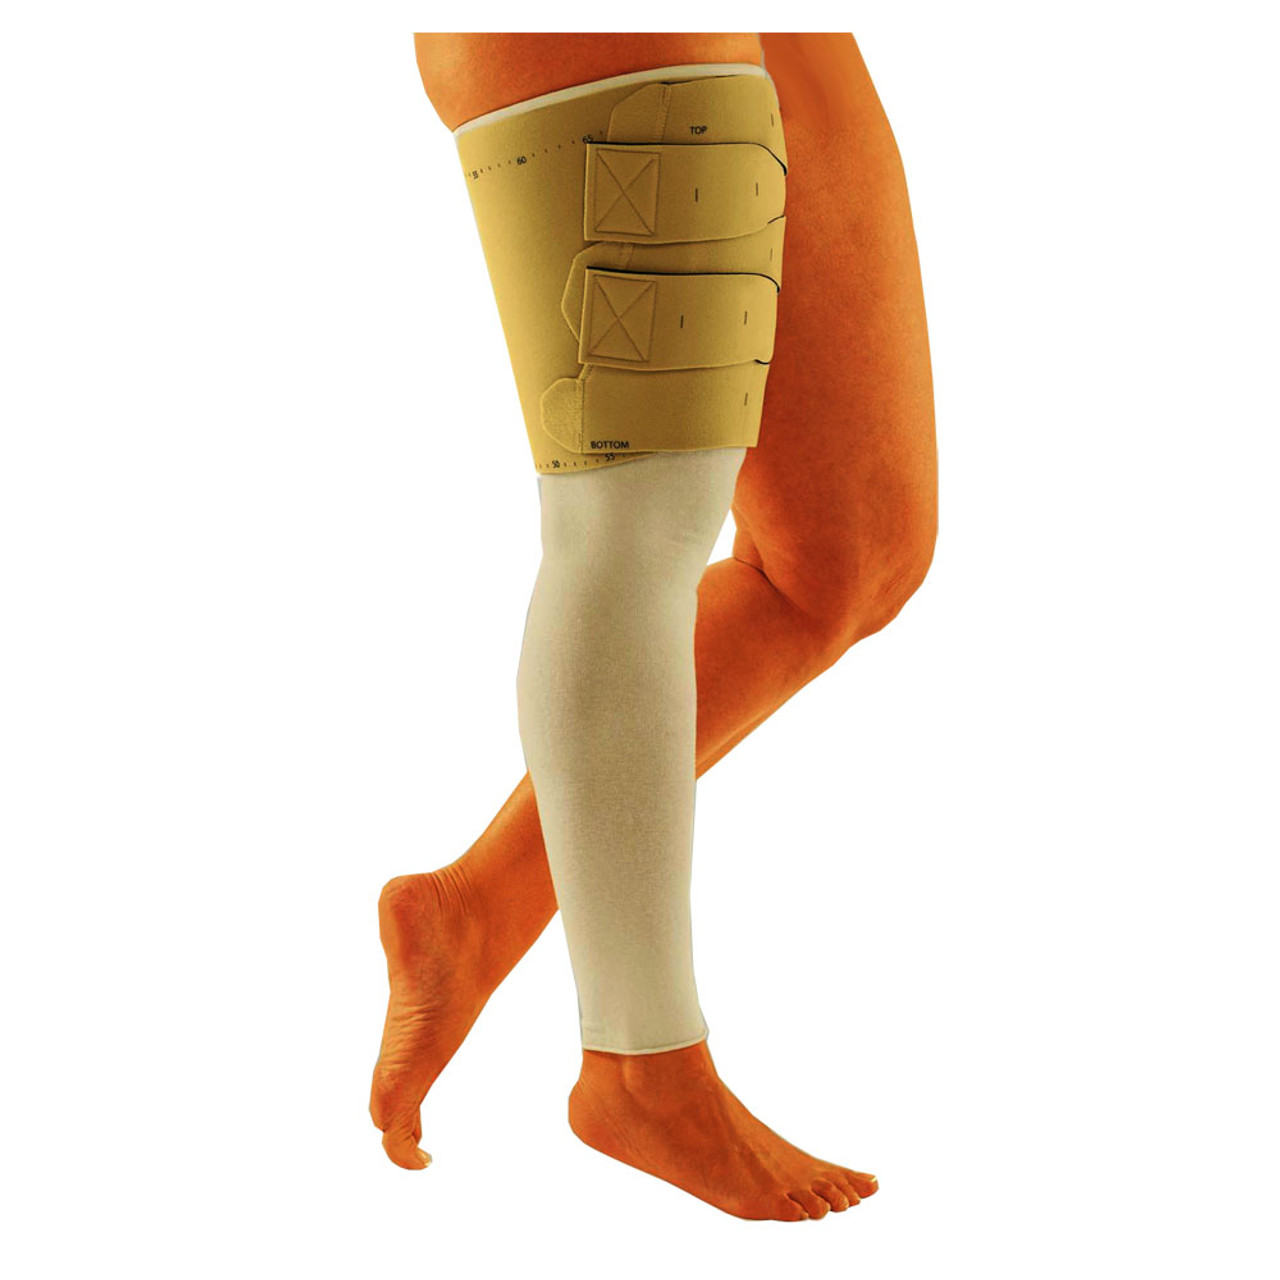 CircAid Reduction Kit Full Leg